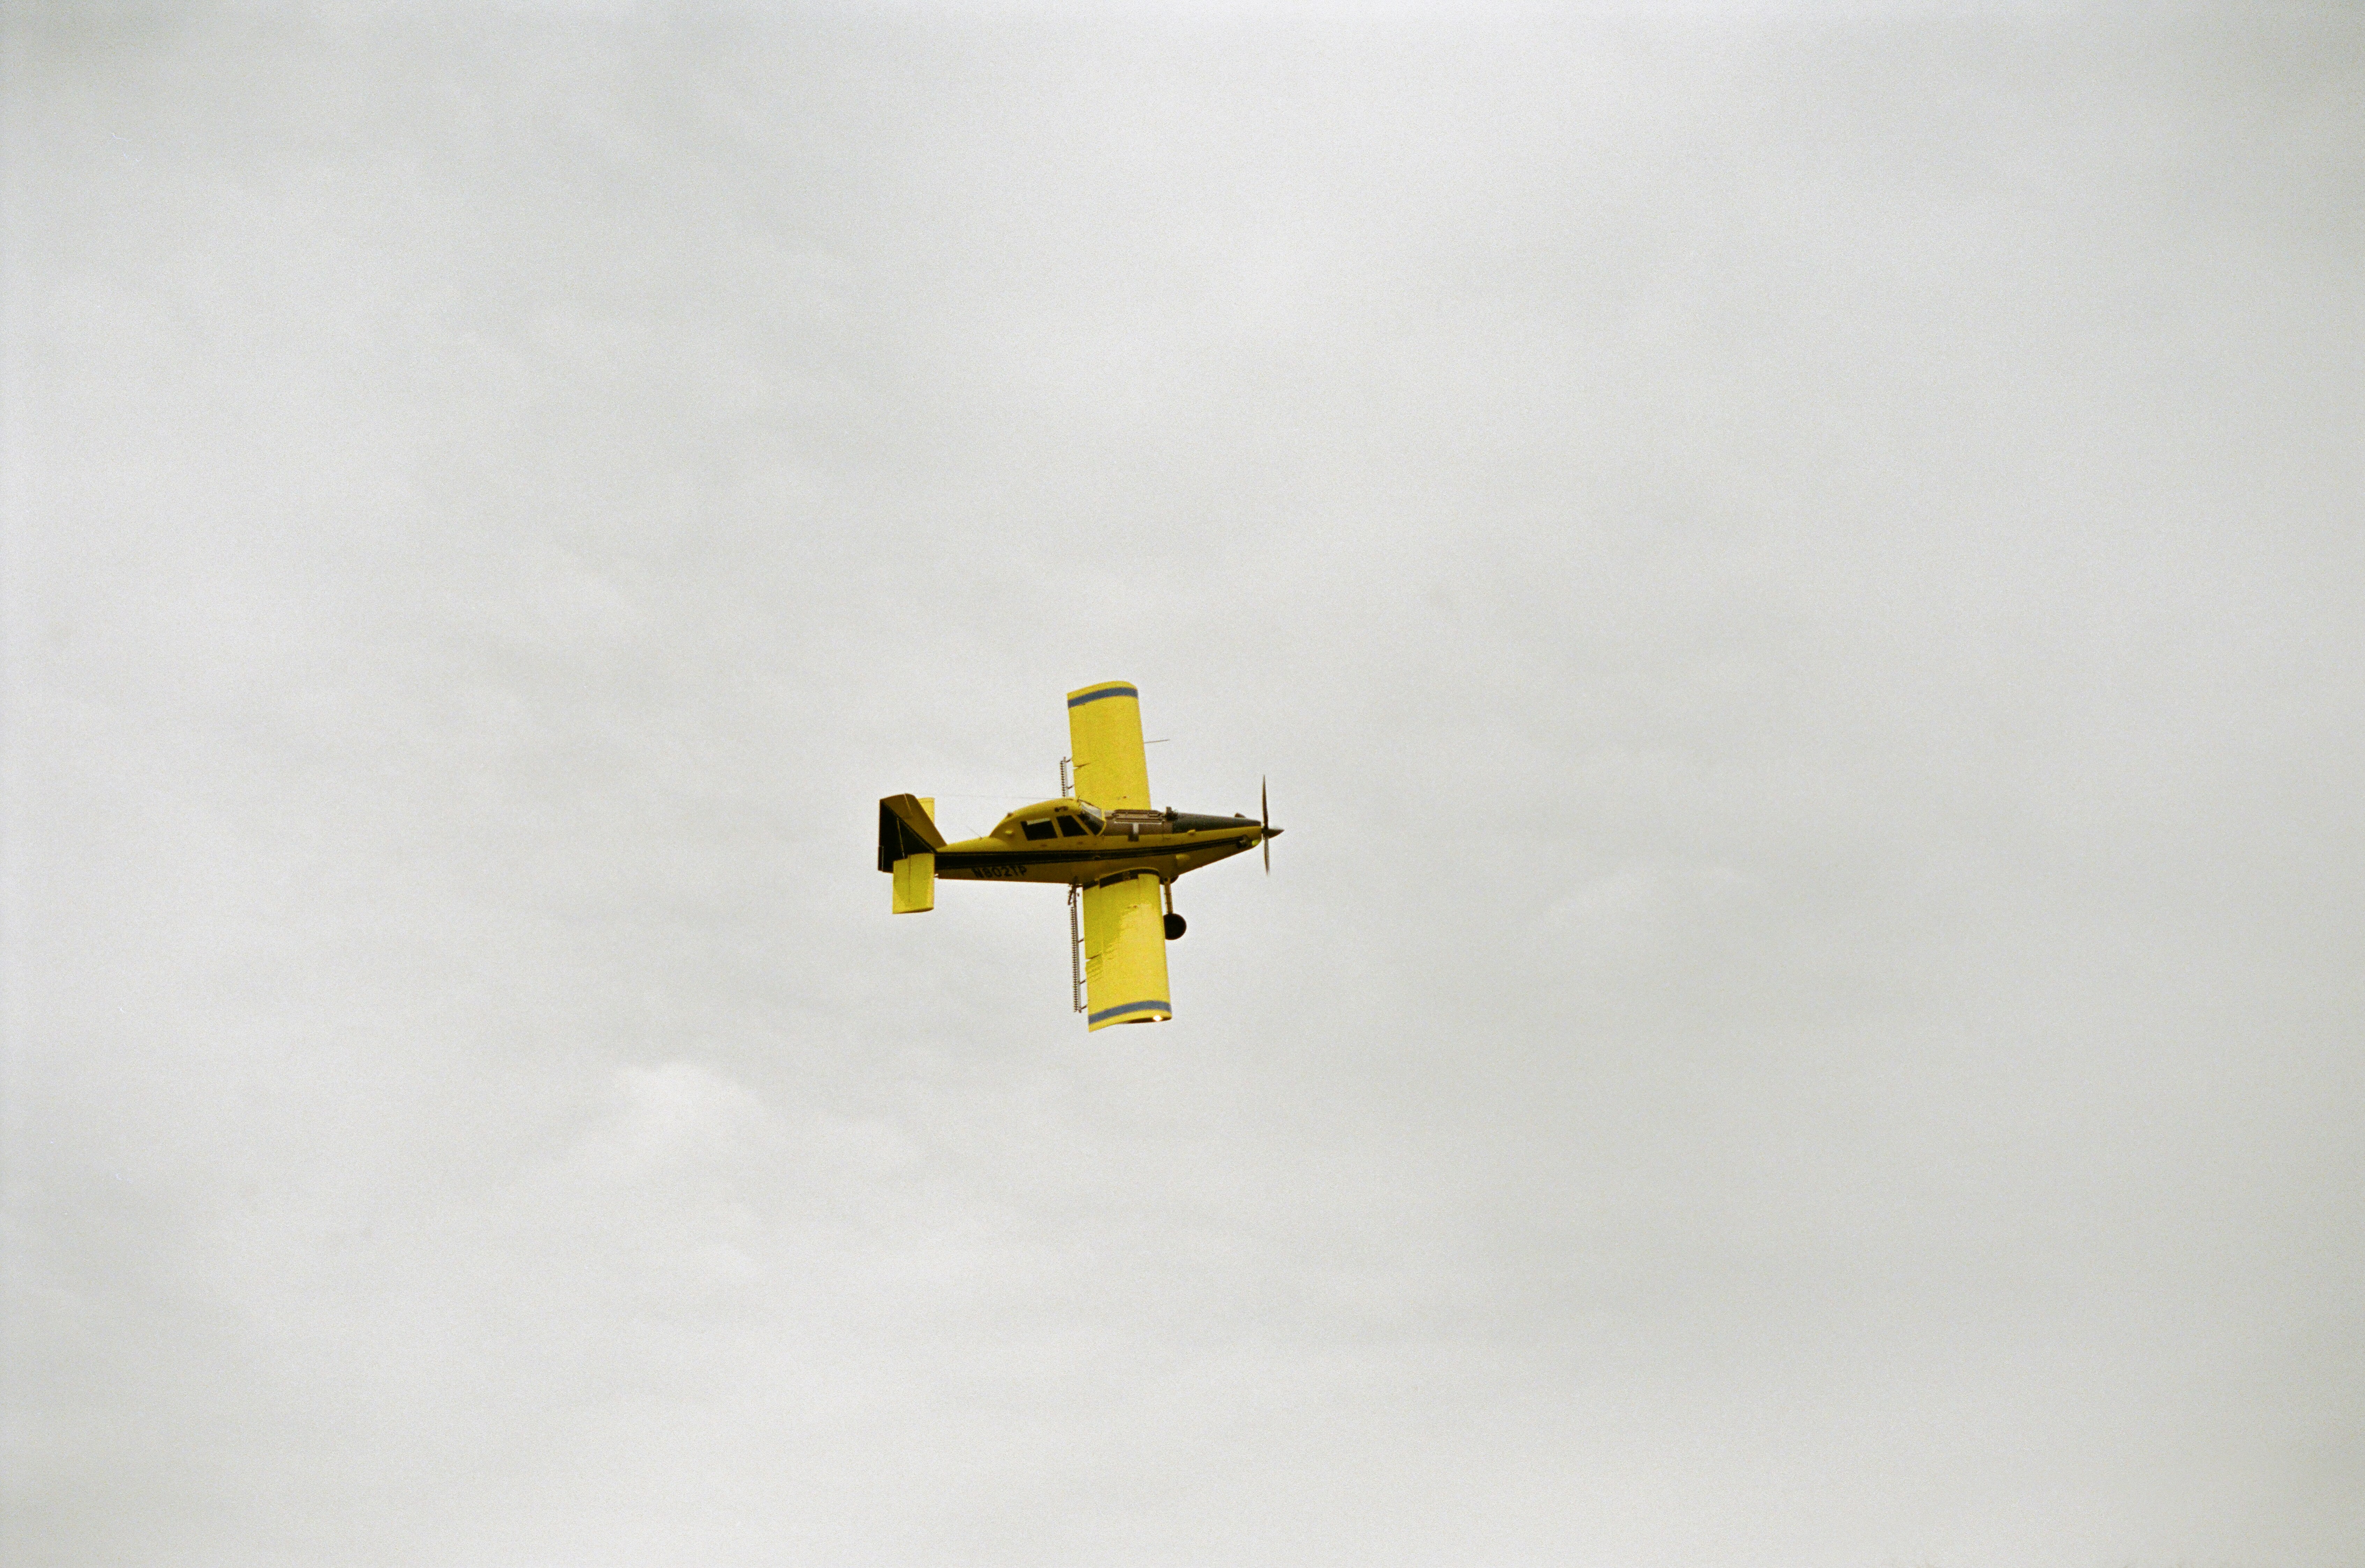 yellow bi-plane flying under white clouds